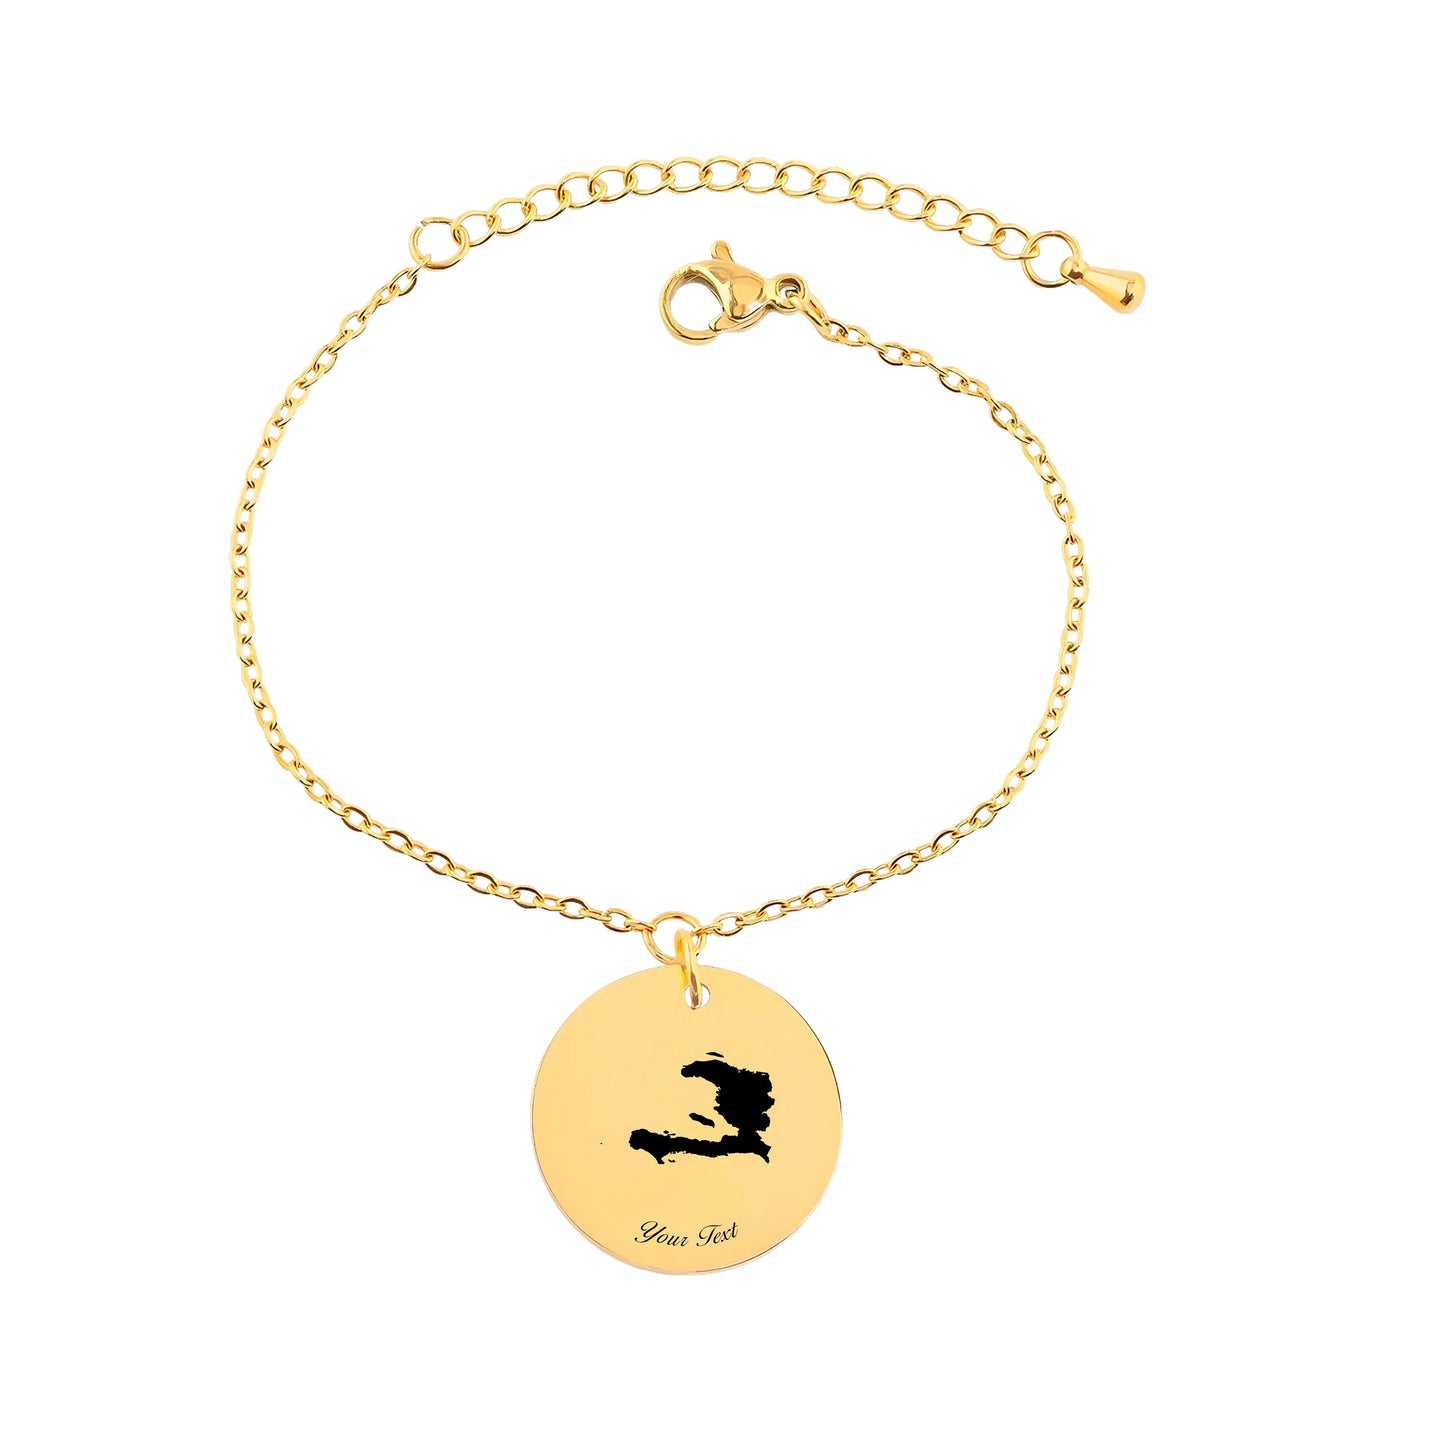 Haiti Country Map Bracelet, Your Name Bracelet, Minimalist Bracelet, Personalized Gift, 14K Gold Bracelet, Gift For Him Her